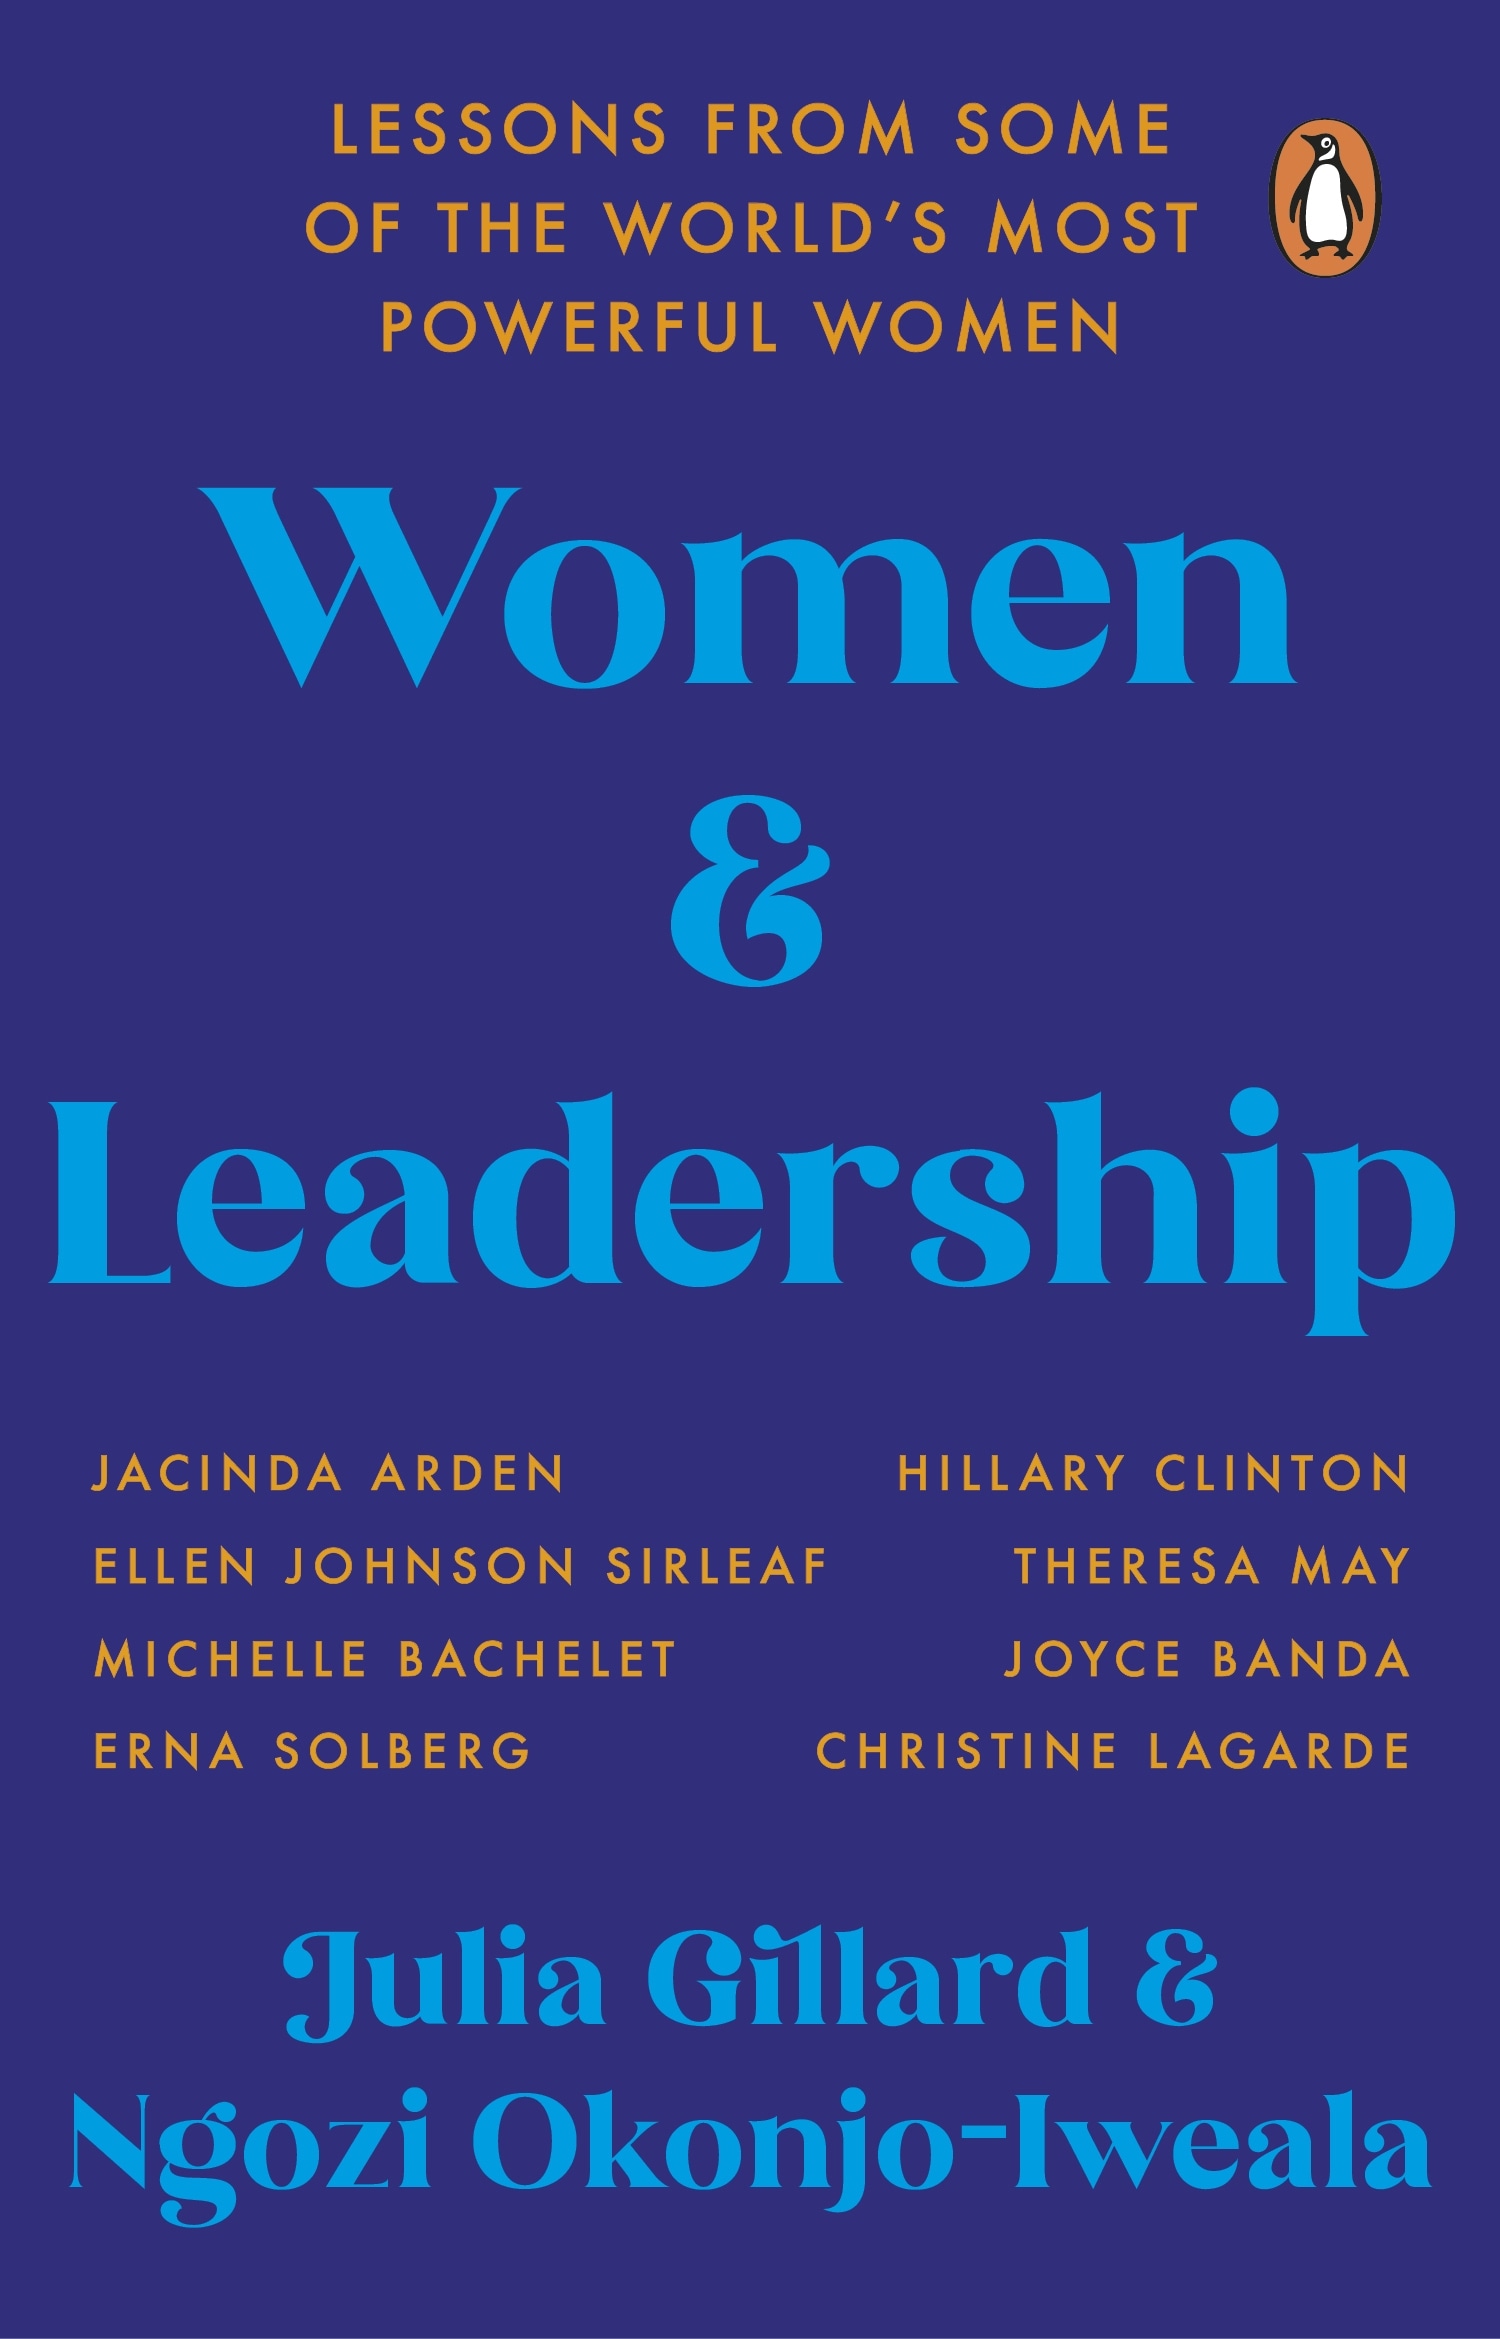 Book “Women and Leadership” by Julia Gillard, Ngozi Okonjo-Iweala — June 3, 2021